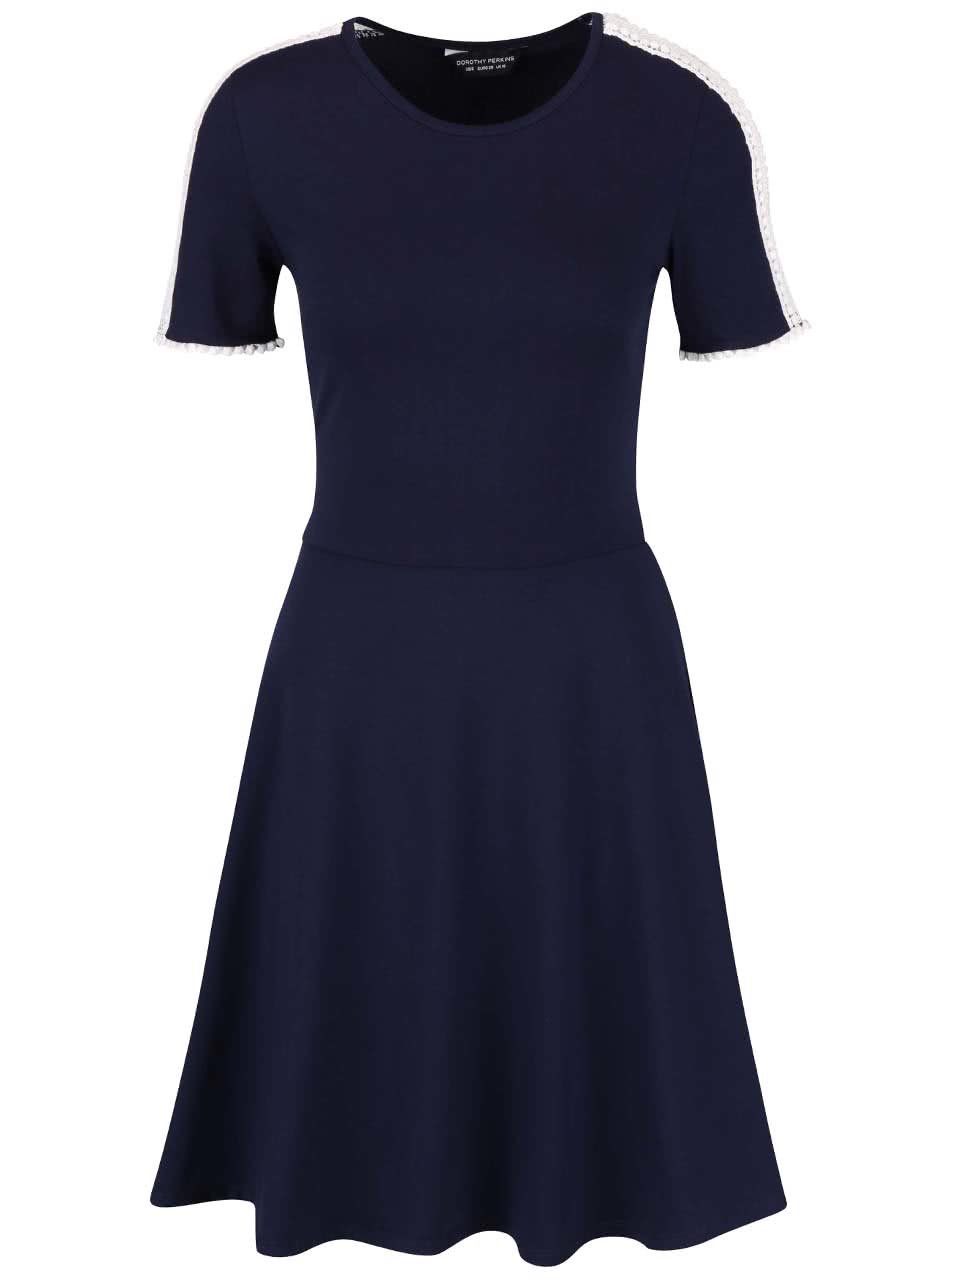 Tmavě modré šaty s krajkovými detaily Dorothy Perkins